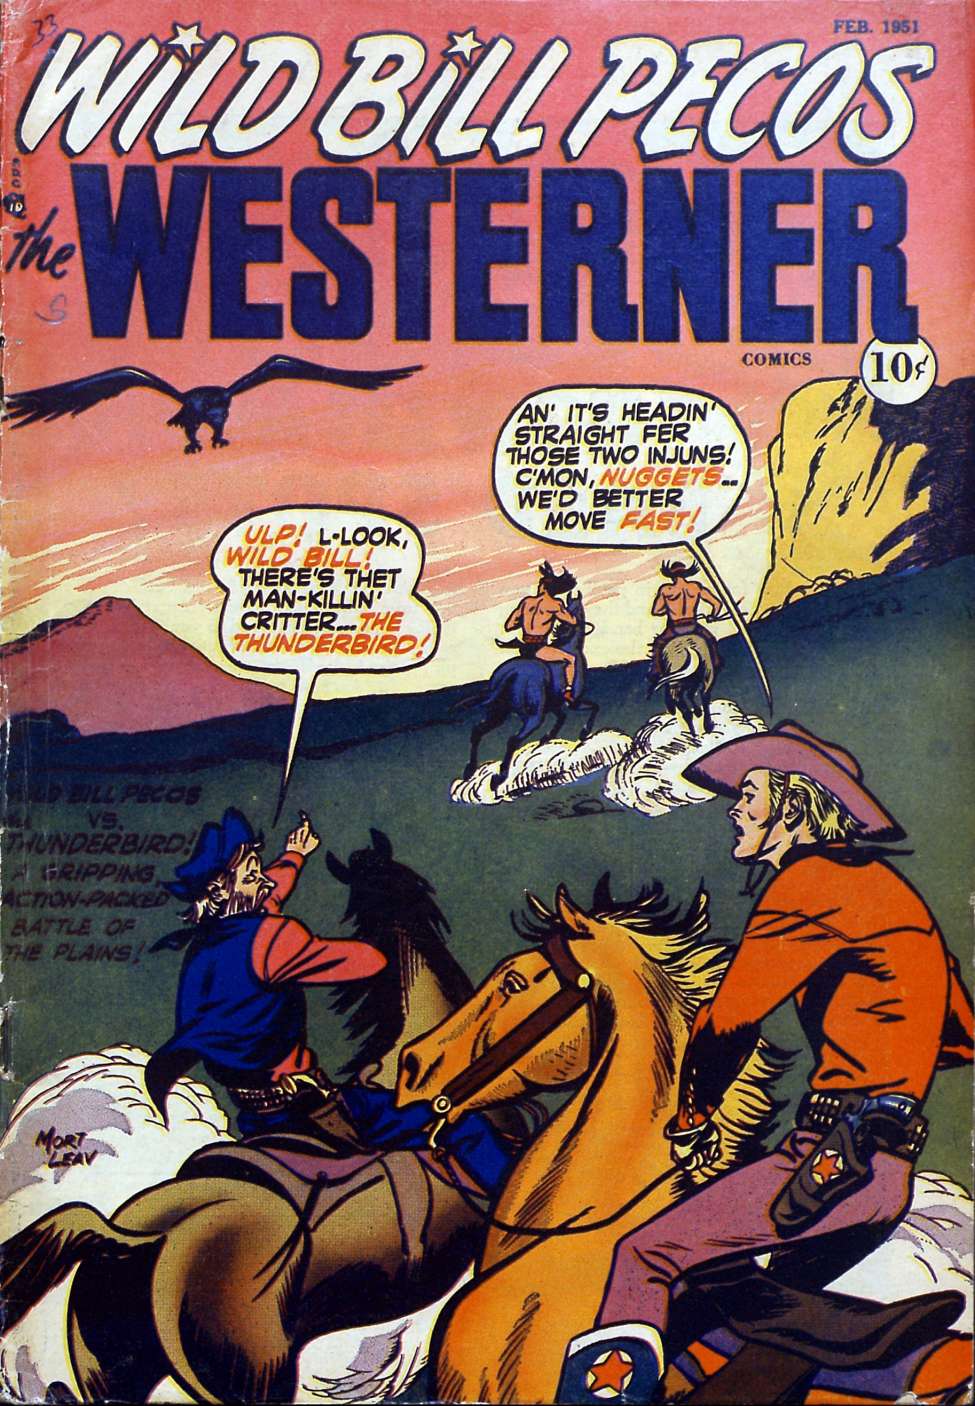 Book Cover For The Westerner 33 (alt) - Version 2